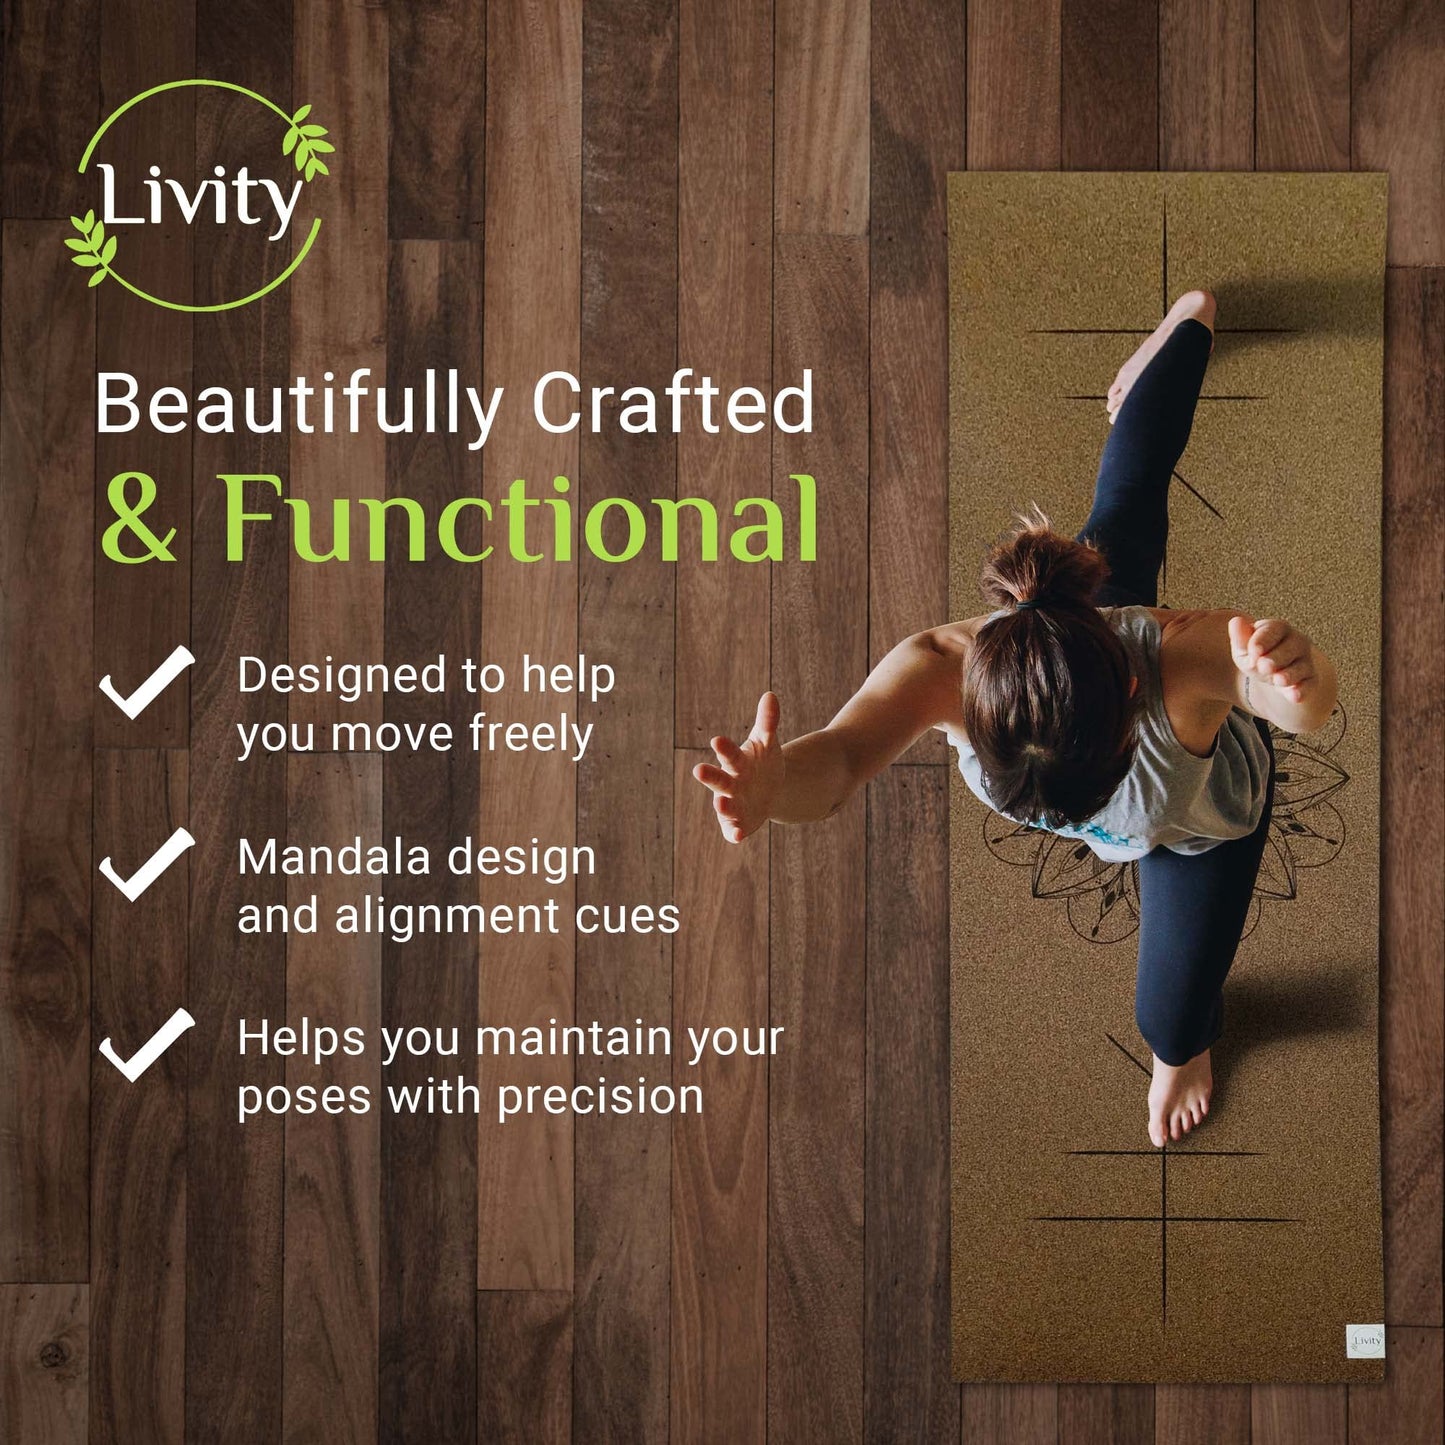 Livity Yoga - Mandala Cork Yoga Mat, Durable & Non-Slip Workout Mat, Cork Exercise Mat with Beautiful Mandala Design & Alignment Points, 74 x 24 x 0.2 inches